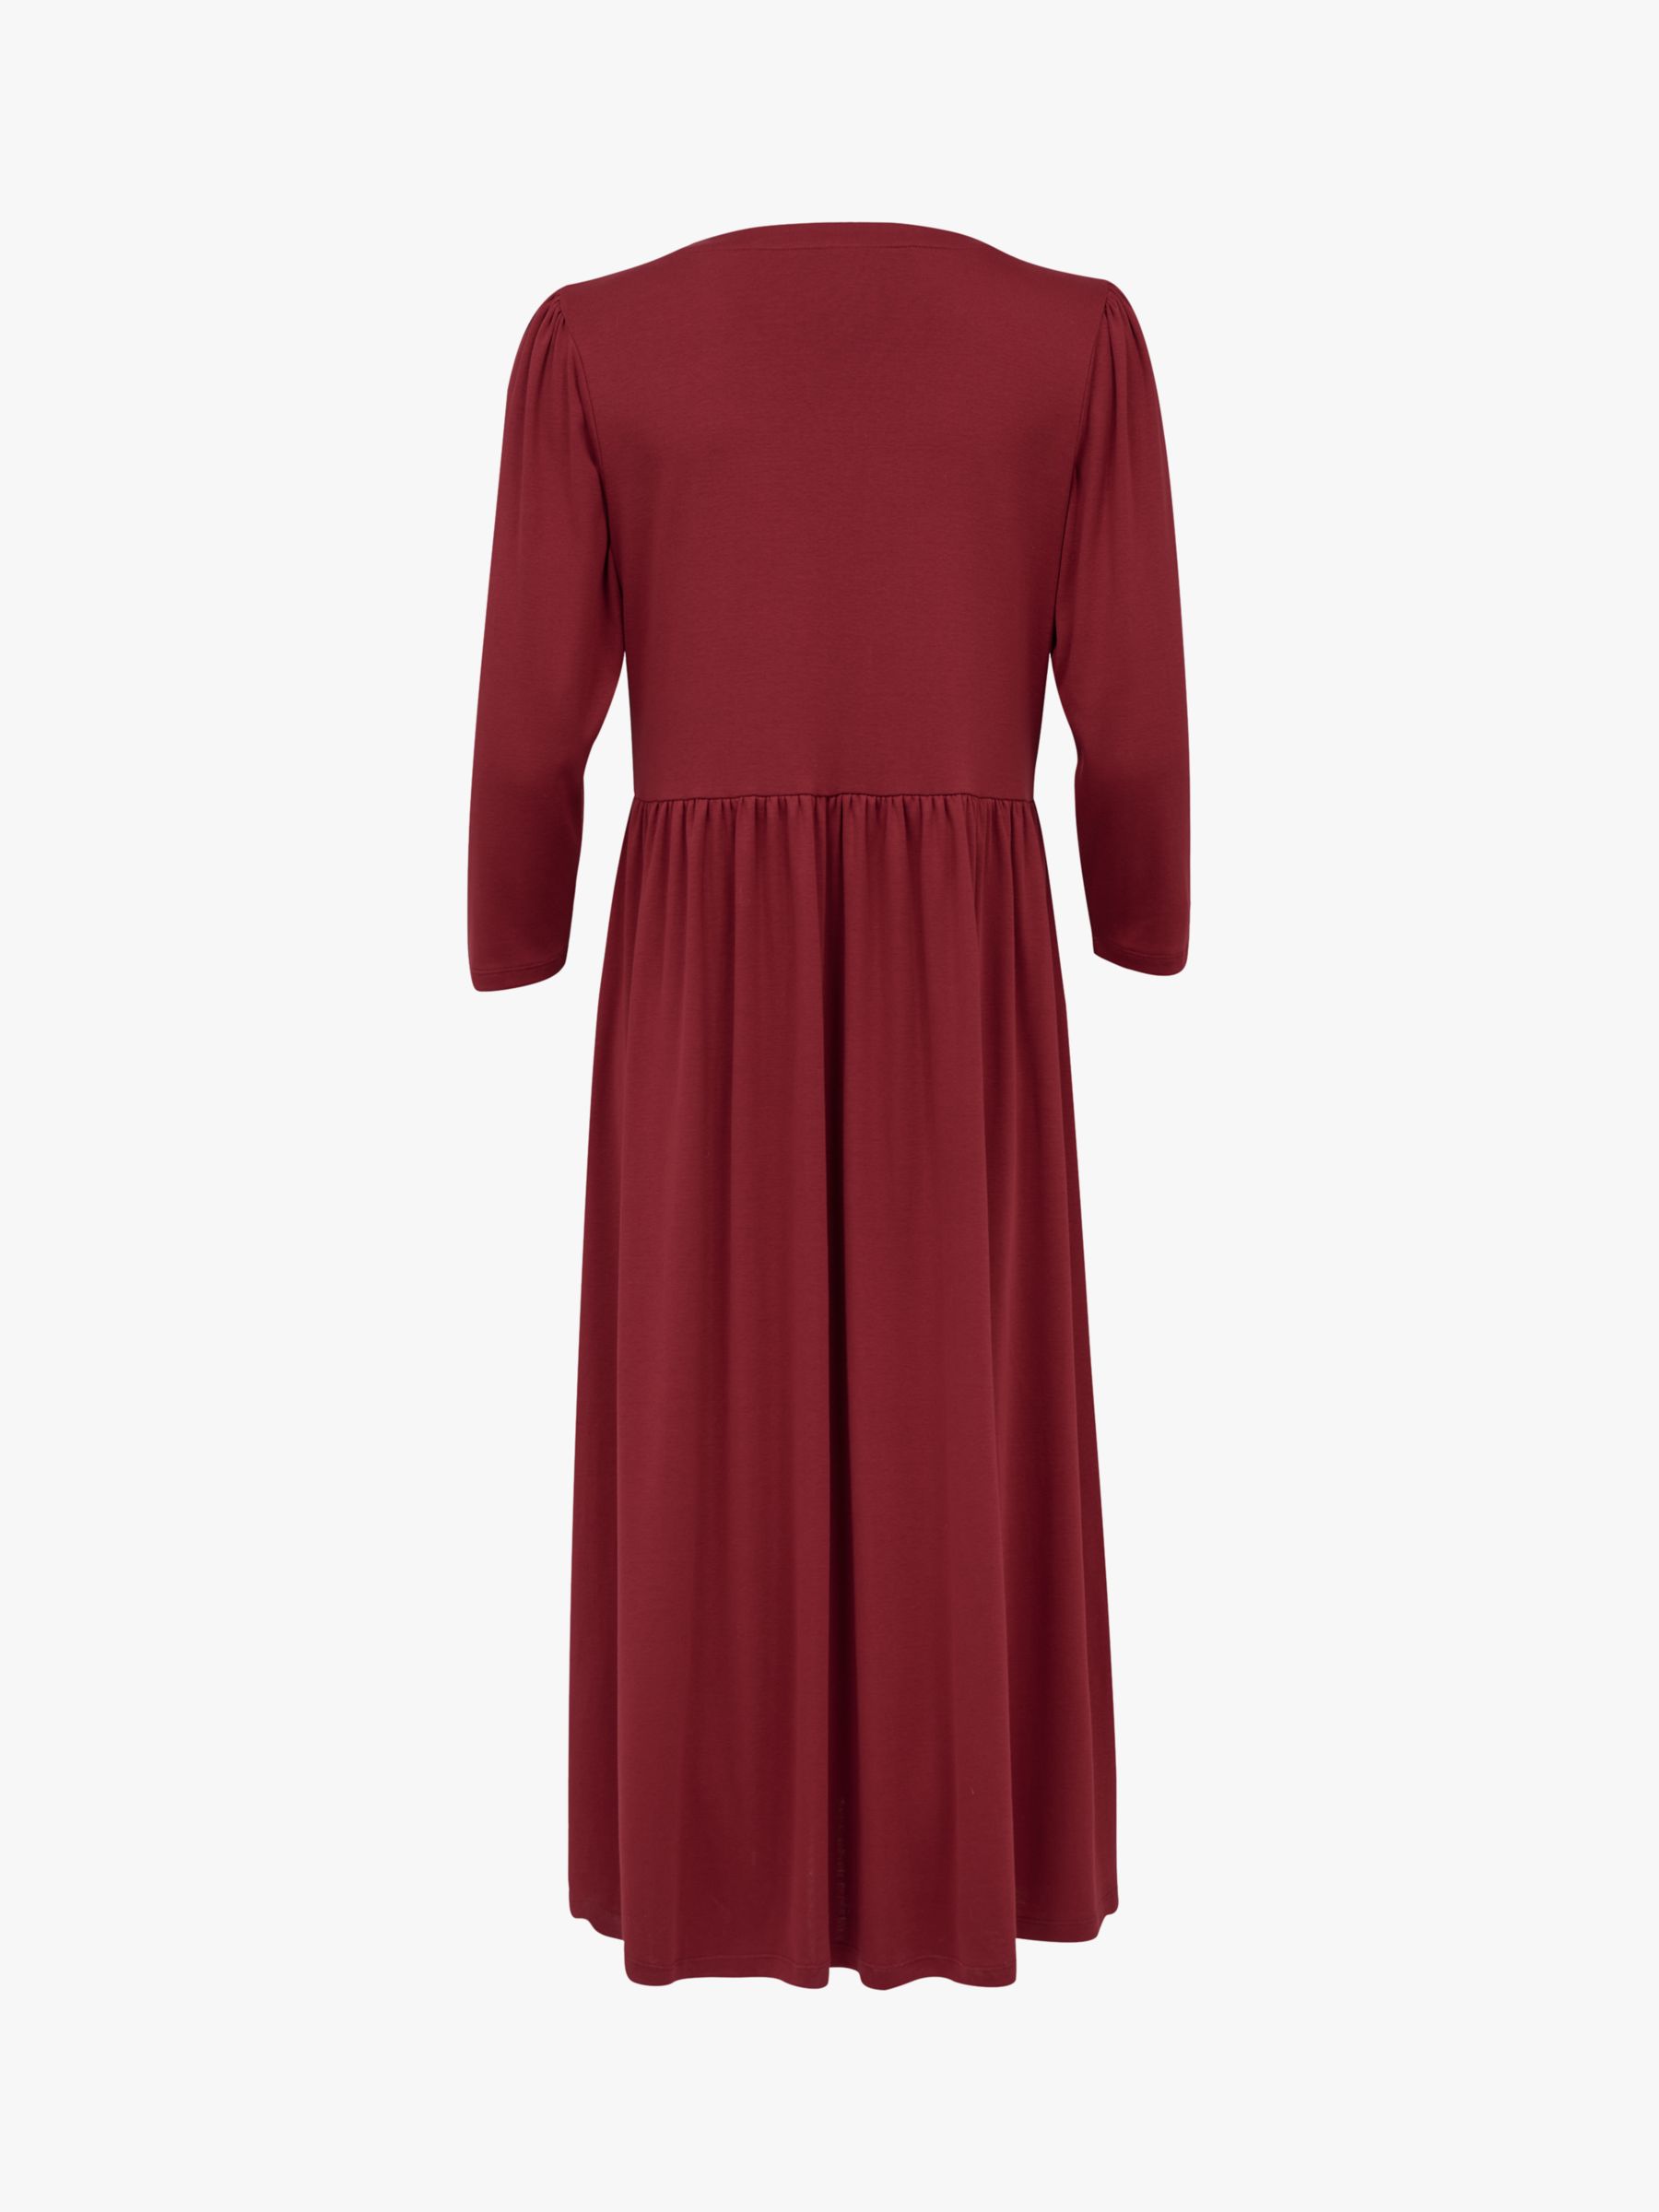 Celtic & Co. Organic Cotton Jersey Midi Dress, Pillarbox Red, 12